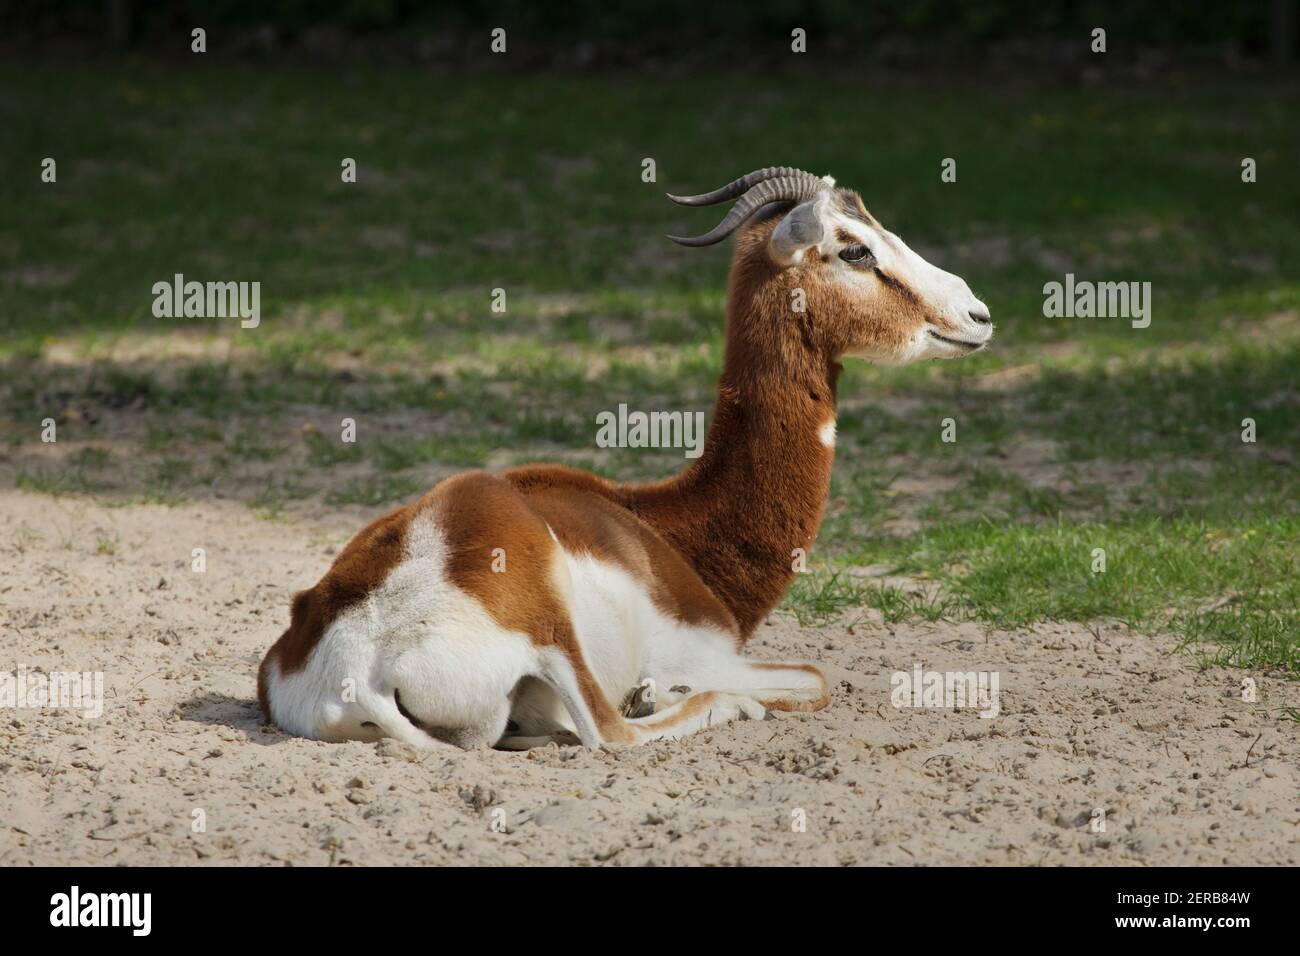 Mhorr gazelle (Nanger dama mhorr), noto anche come la dama Gazzella Foto  stock - Alamy